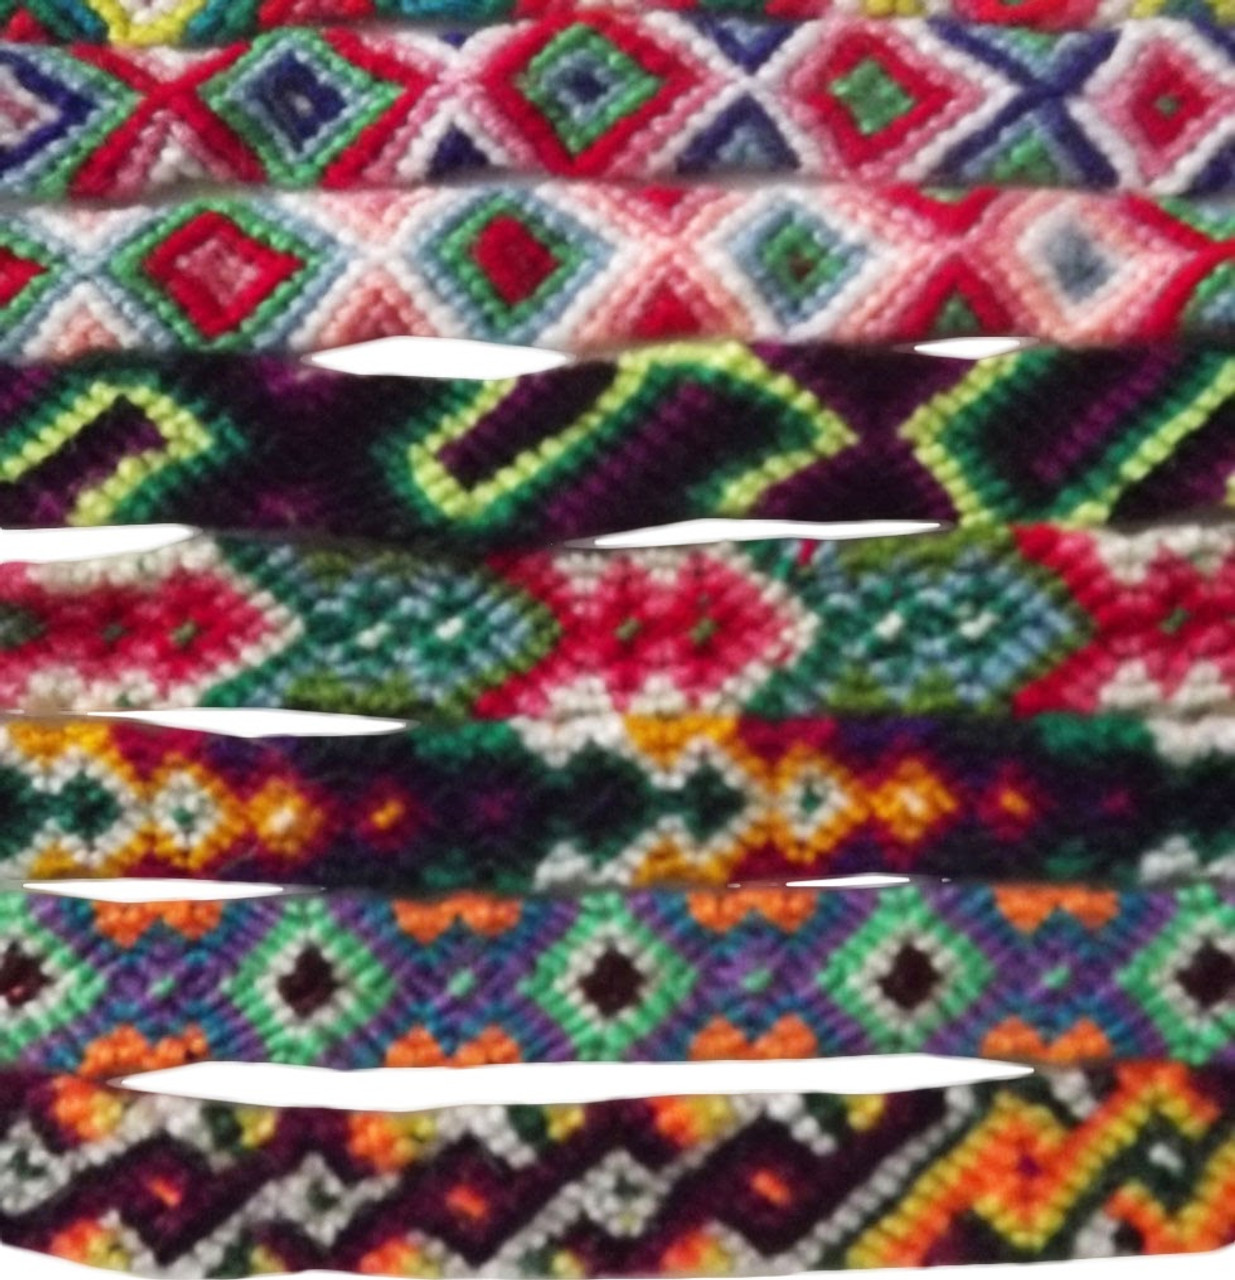 Friendship Bracelets - Spiral Pack of 10 Bundle - Peruvian Fair